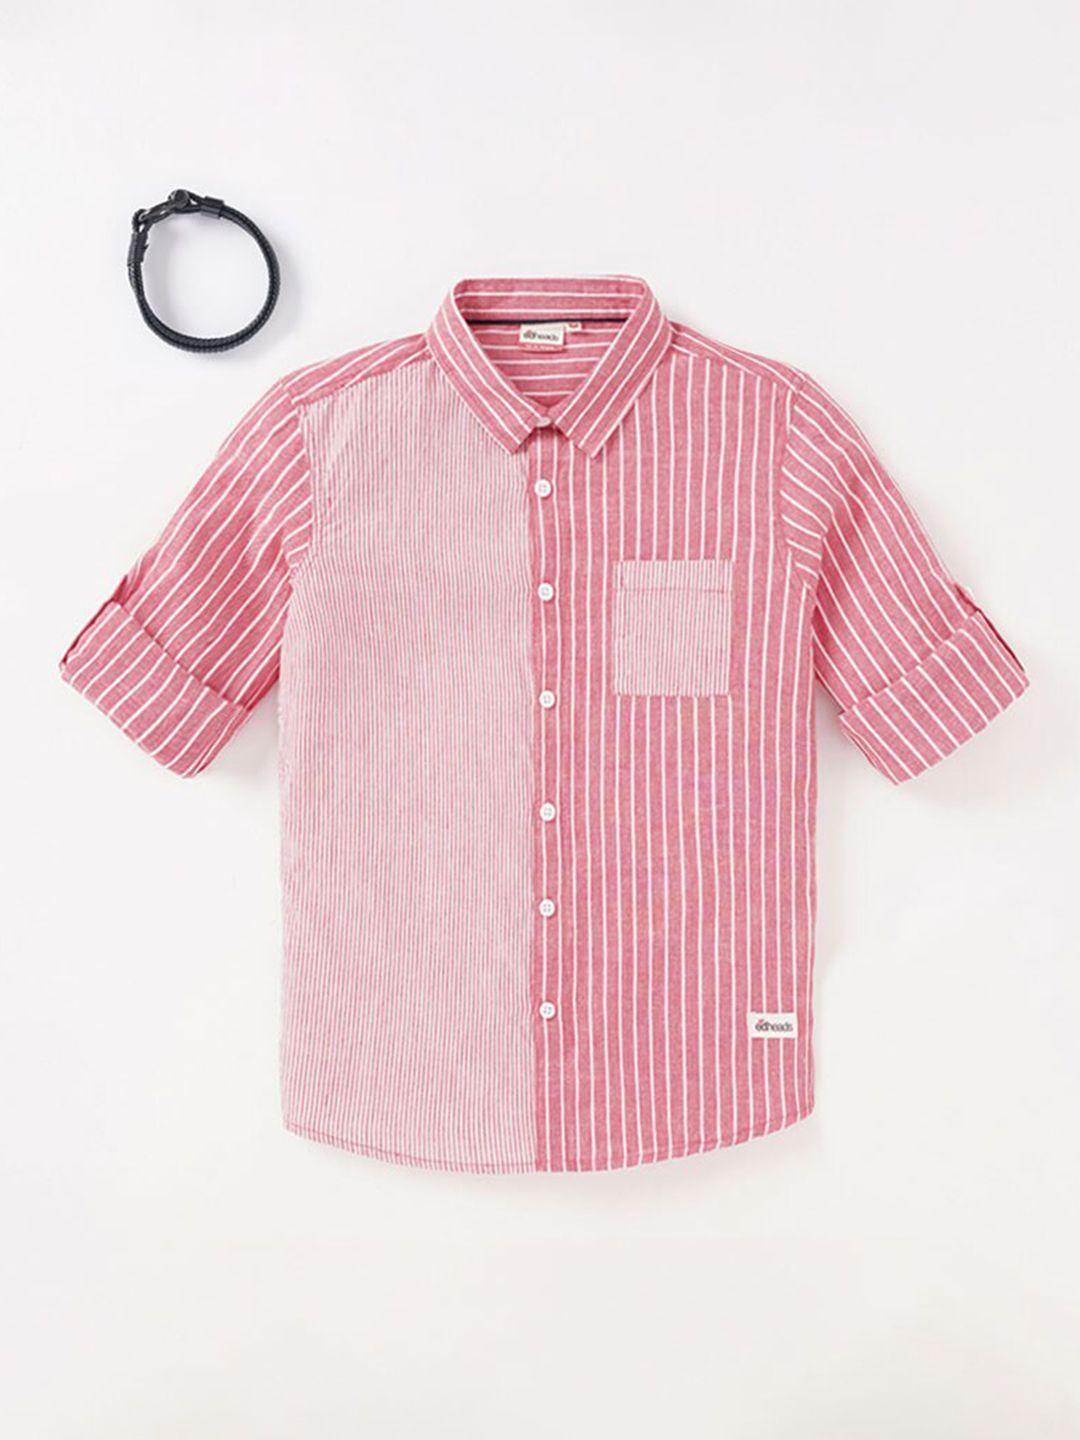 edheads boys pink striped cotton casual shirt